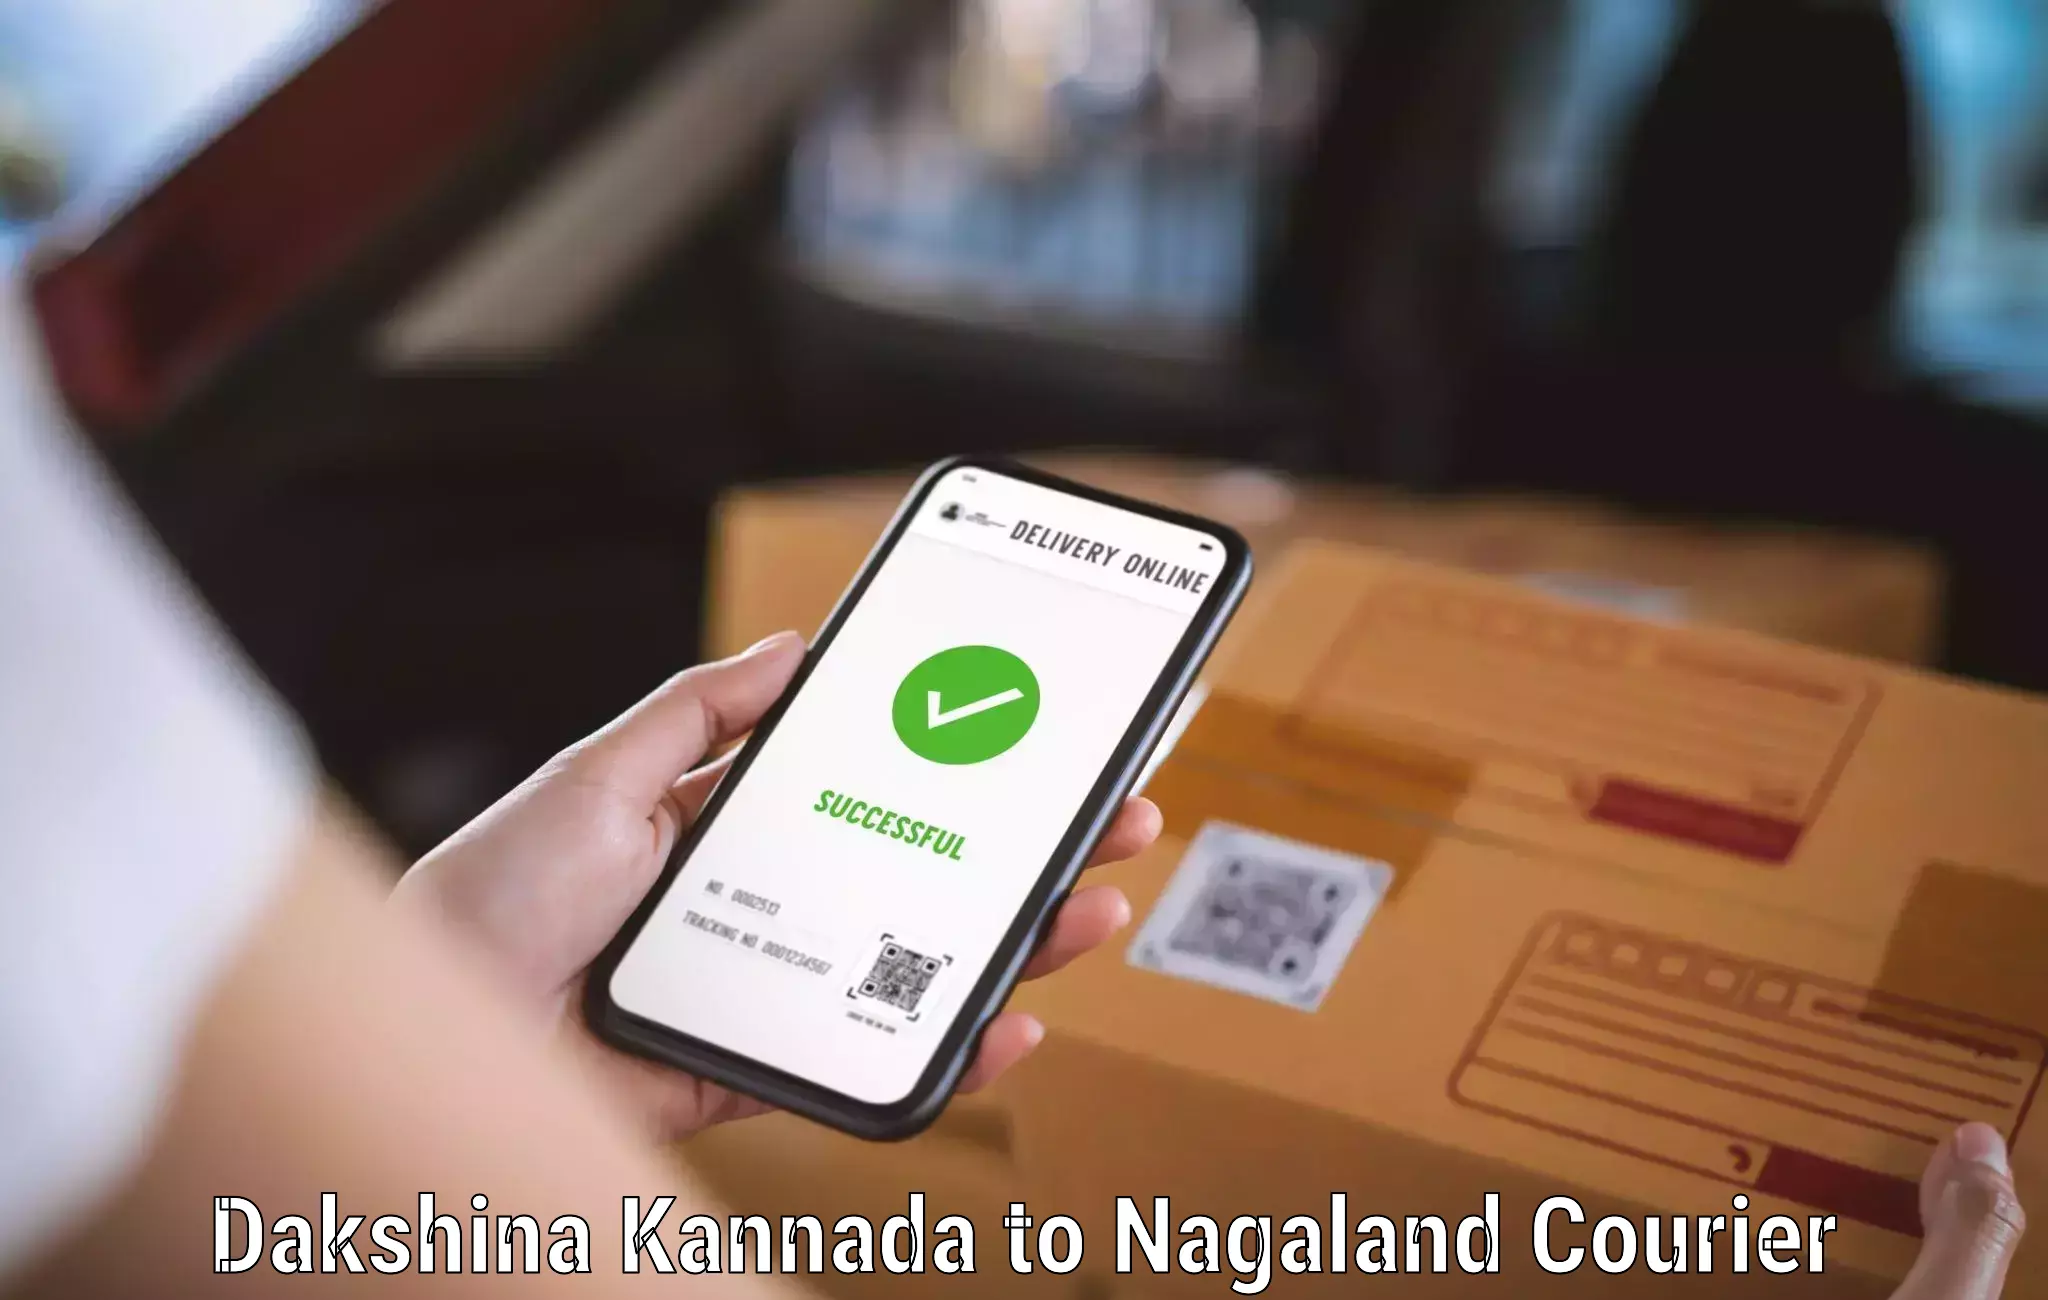 Courier service comparison Dakshina Kannada to Mon